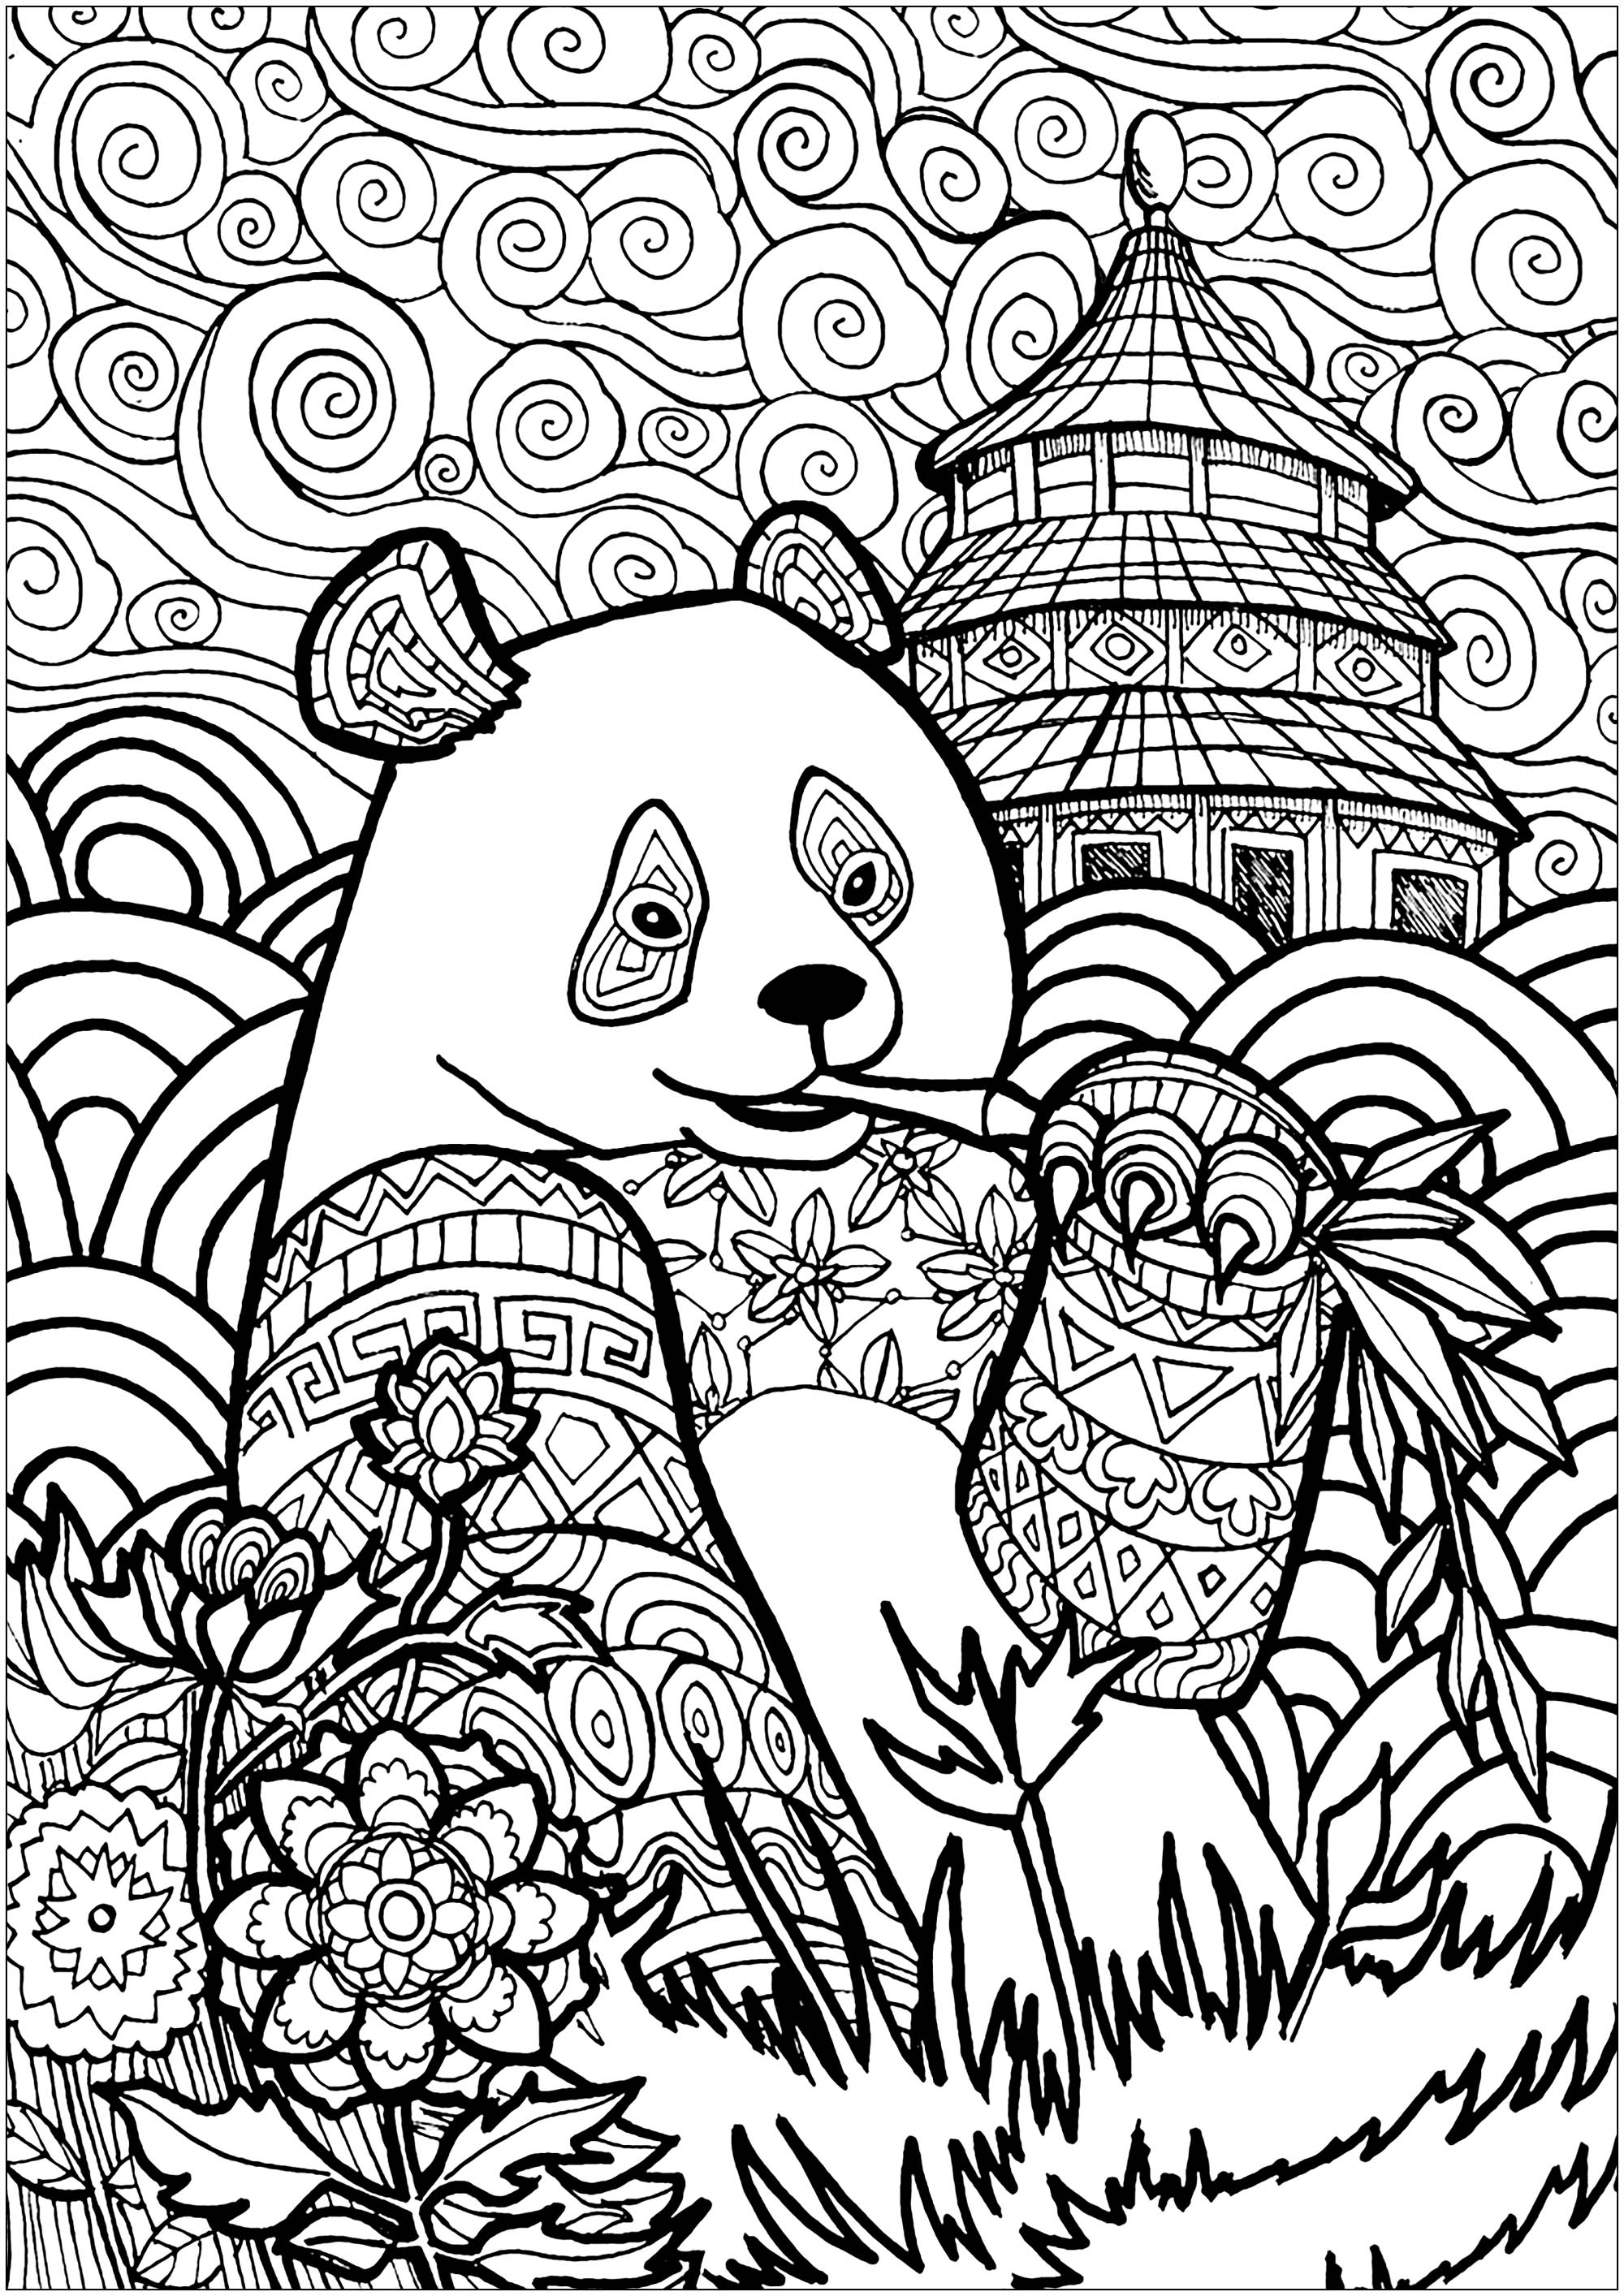 Desenho de Panda come bambu para colorir